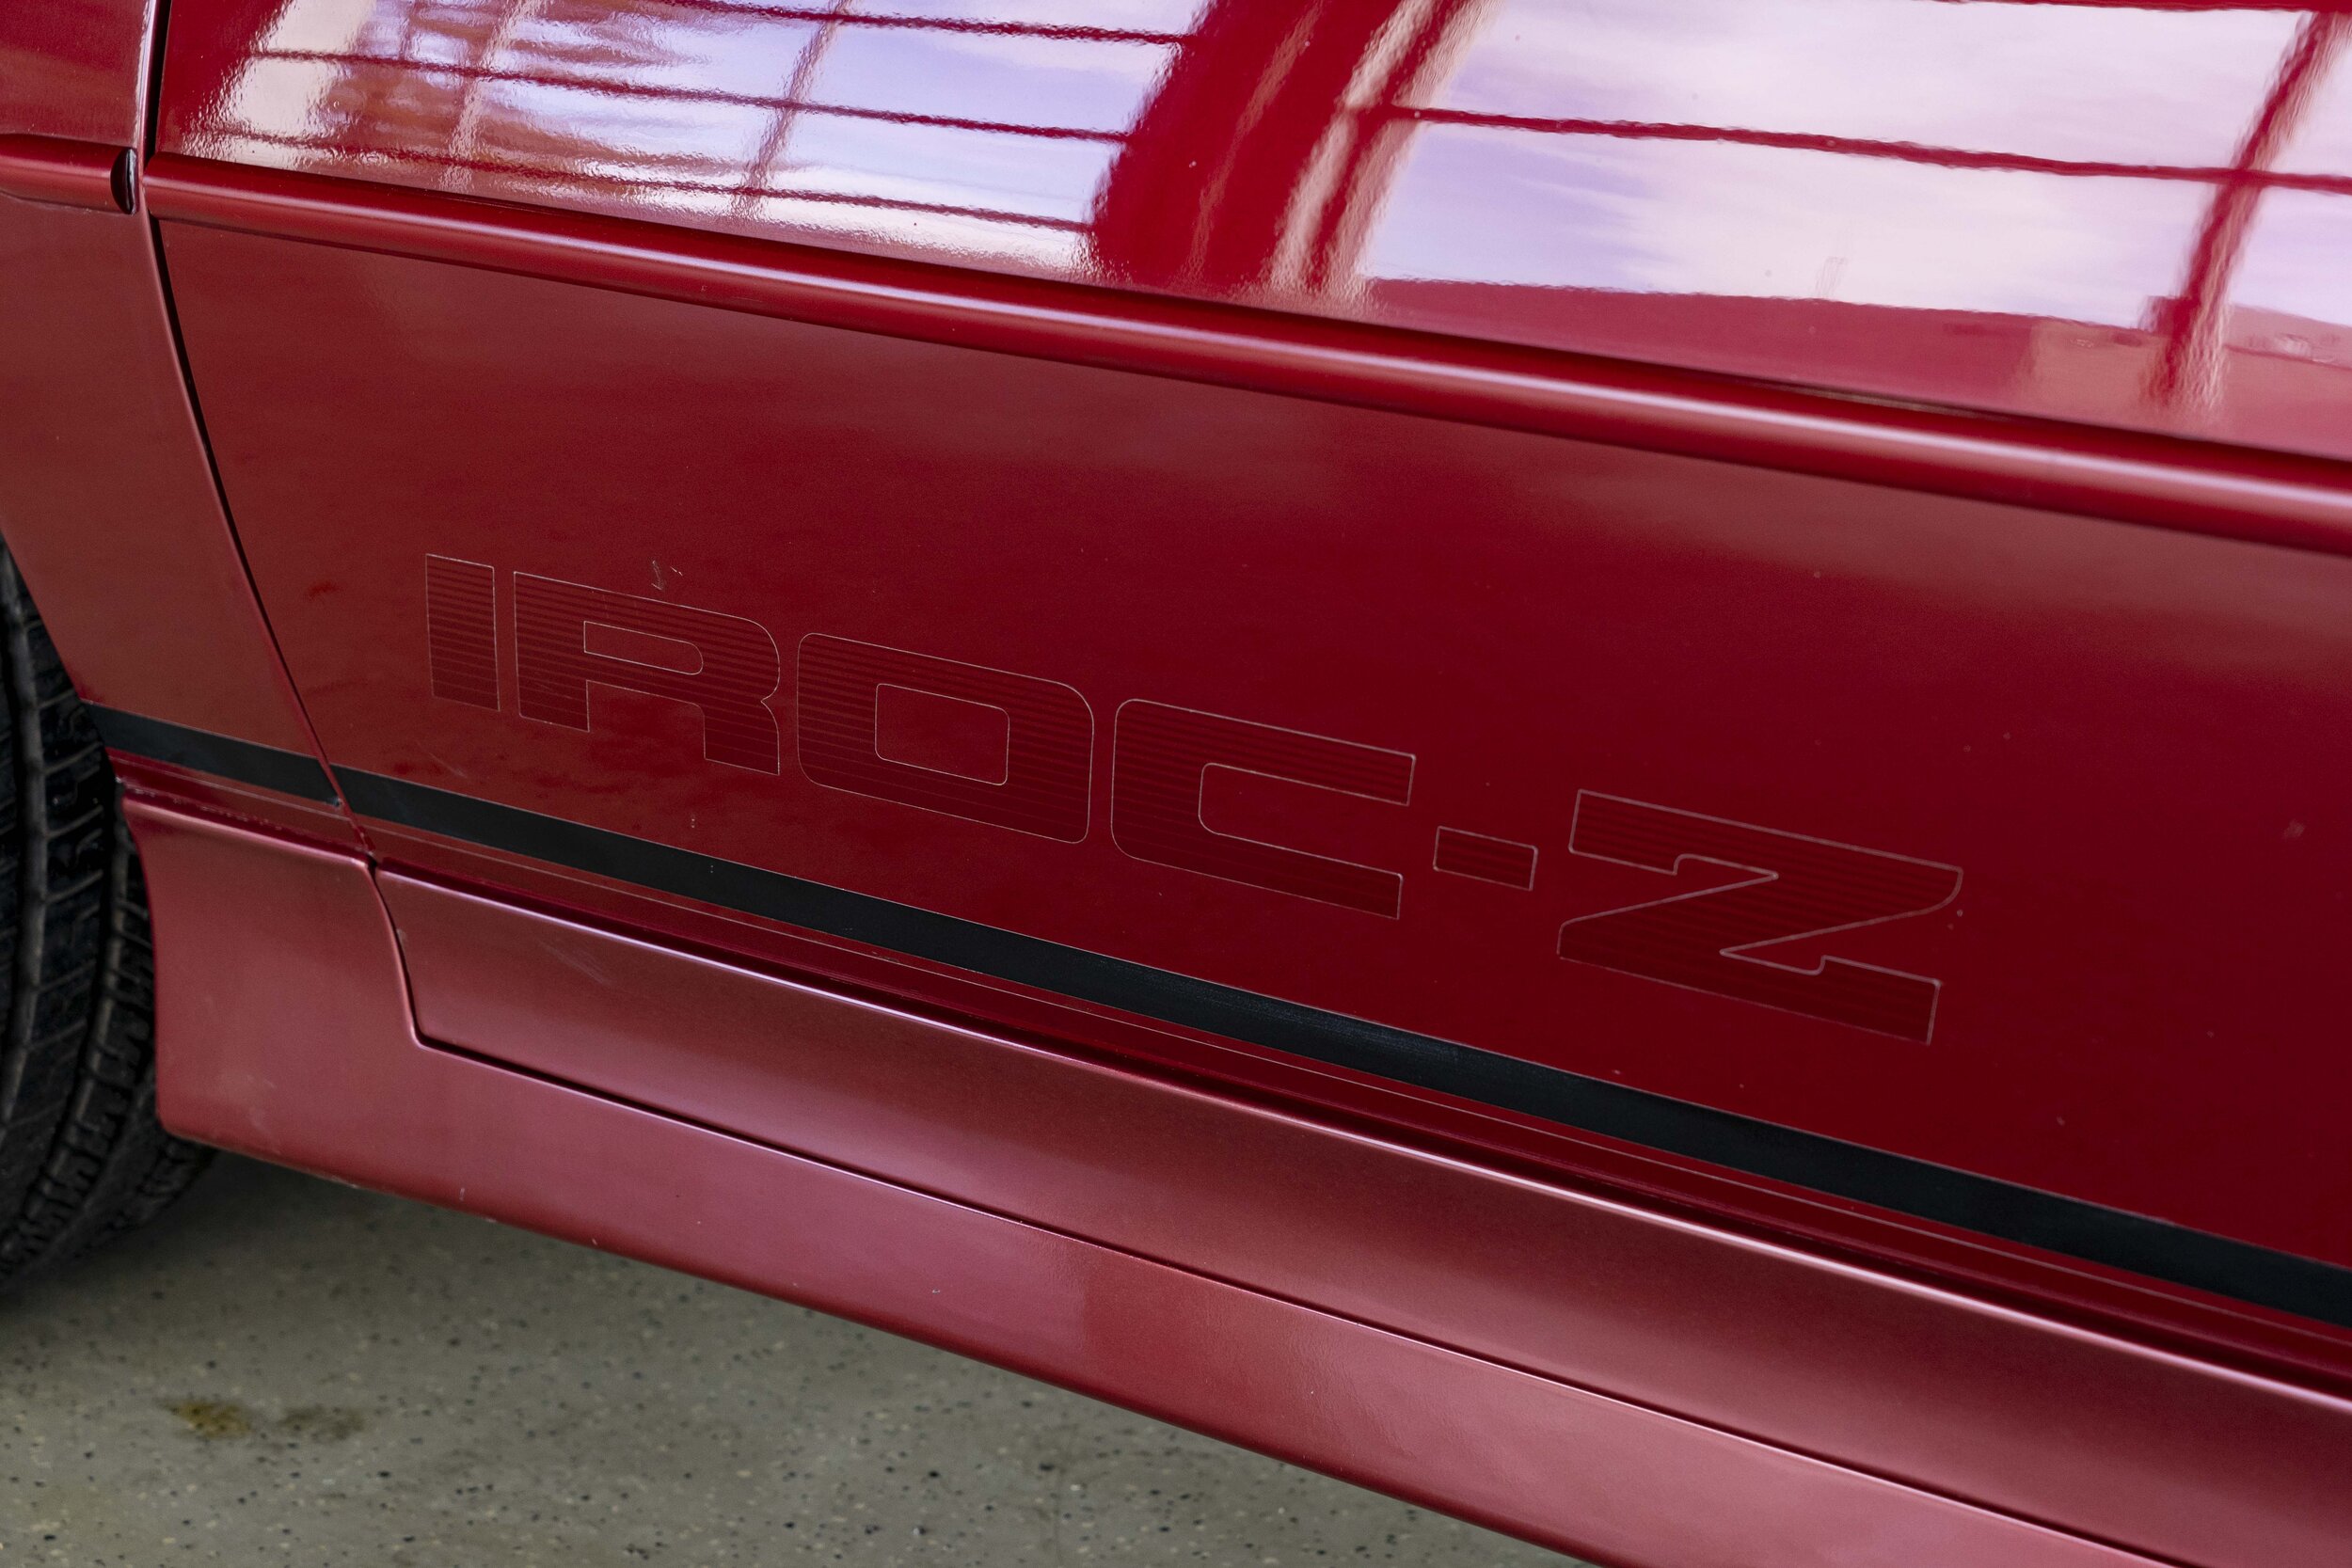 1990 Chevrolet Camaro IROC-Z (20).jpg